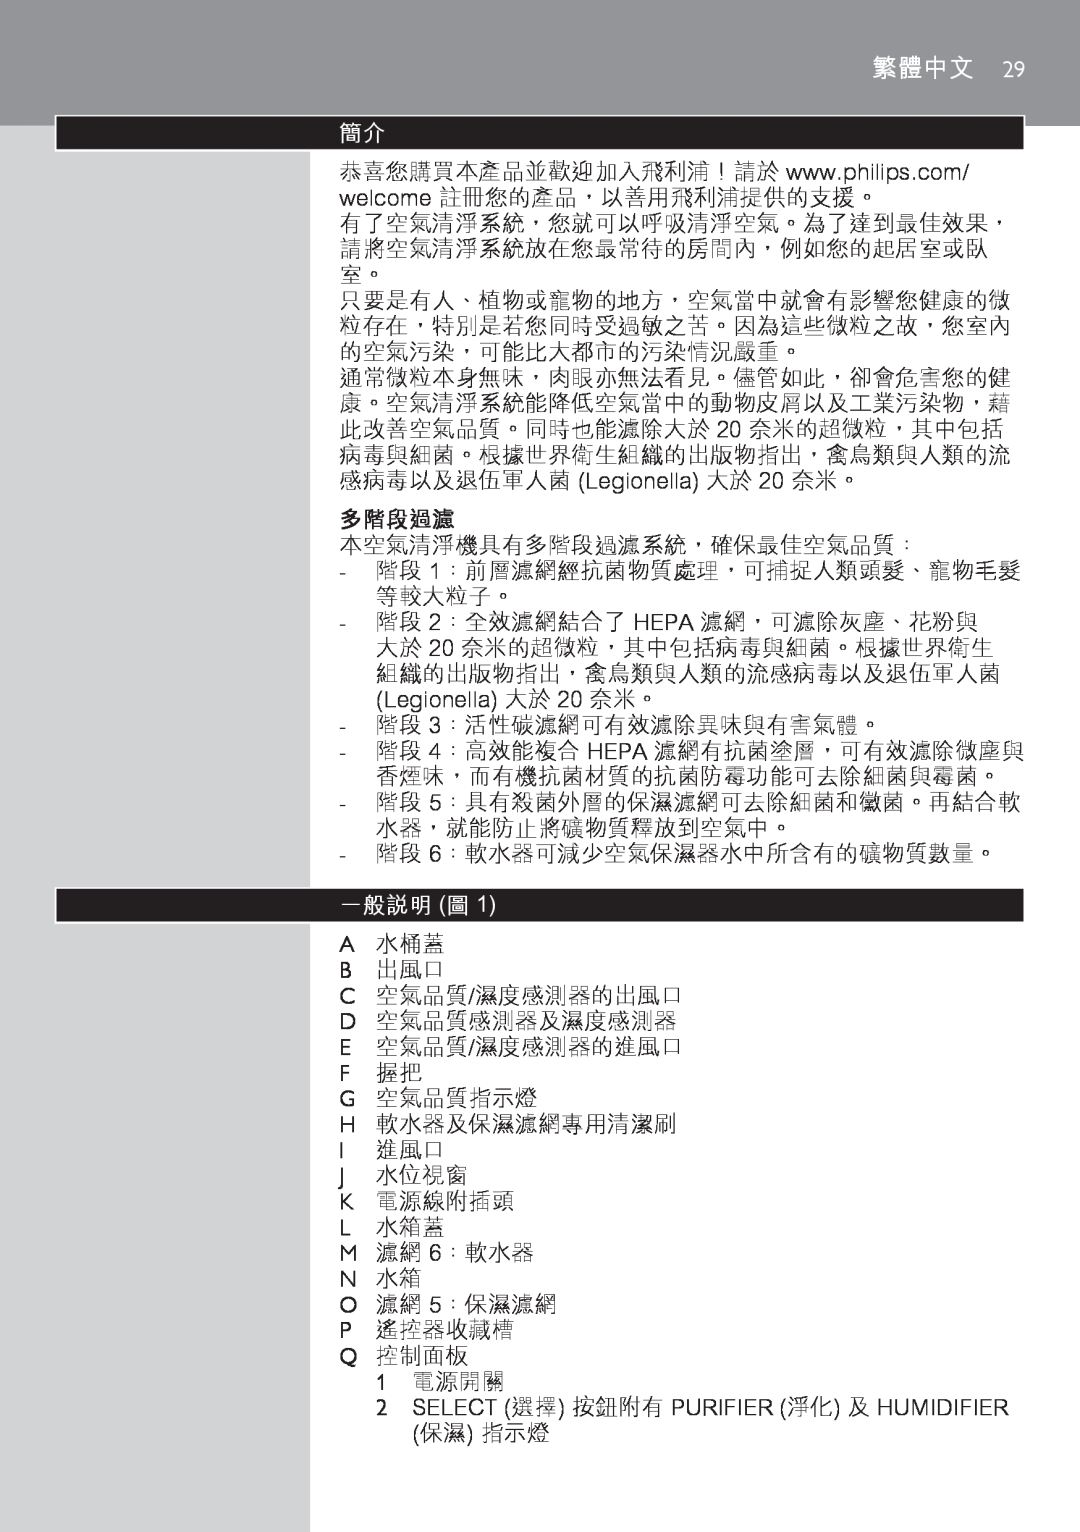 Philips AC4083 manual 多階段過濾, 一般說明圖1, 繁體中文 